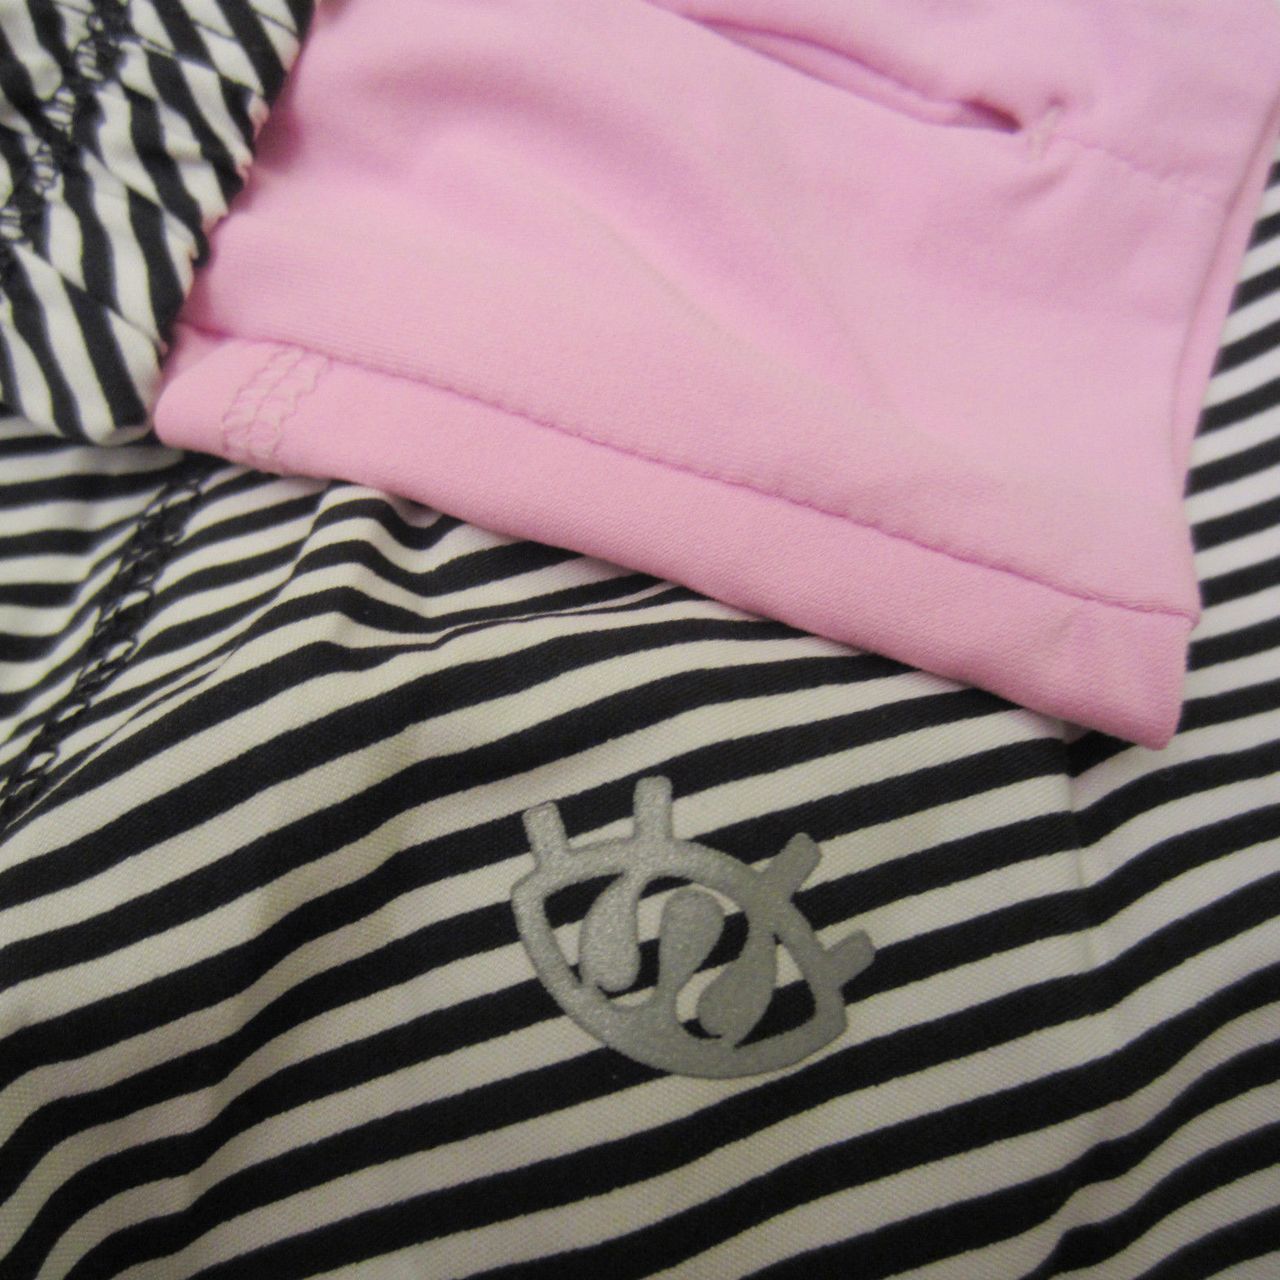 Lululemon Downtime Jacket - 2014 Seawheeze - Zoomer Zip Angel Wing White Black / Vintage Pink